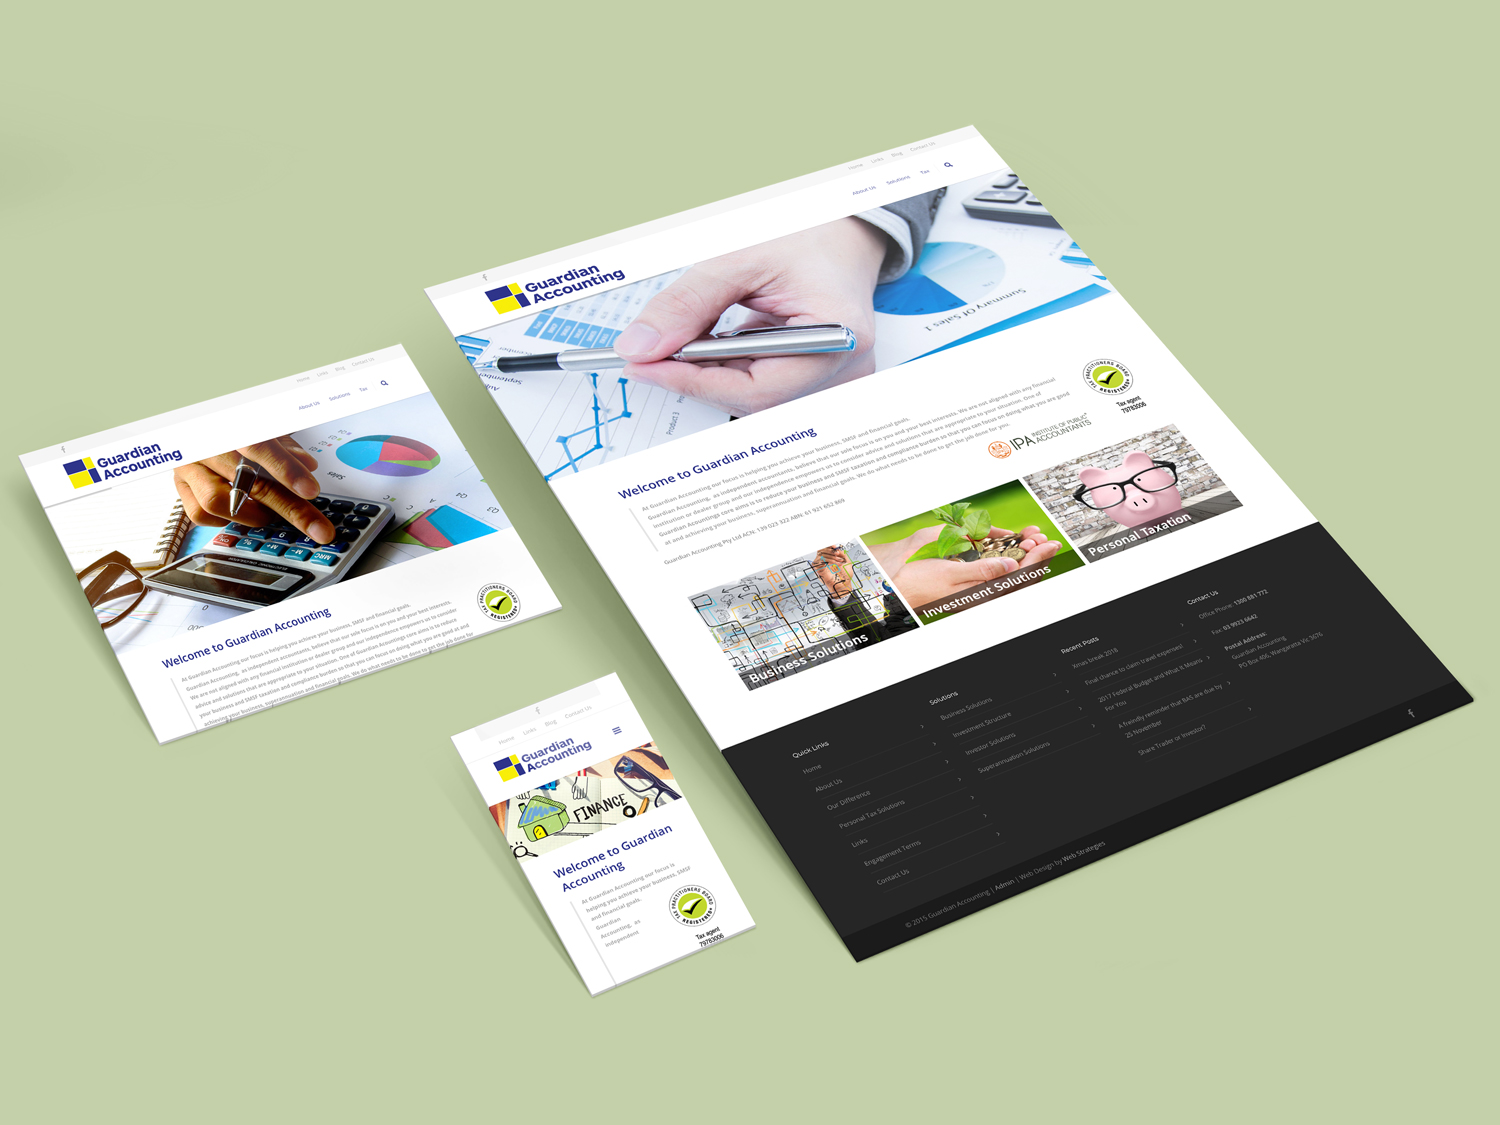 Purple Possum Design – Web Design Wangaratta – Guardian Accounting